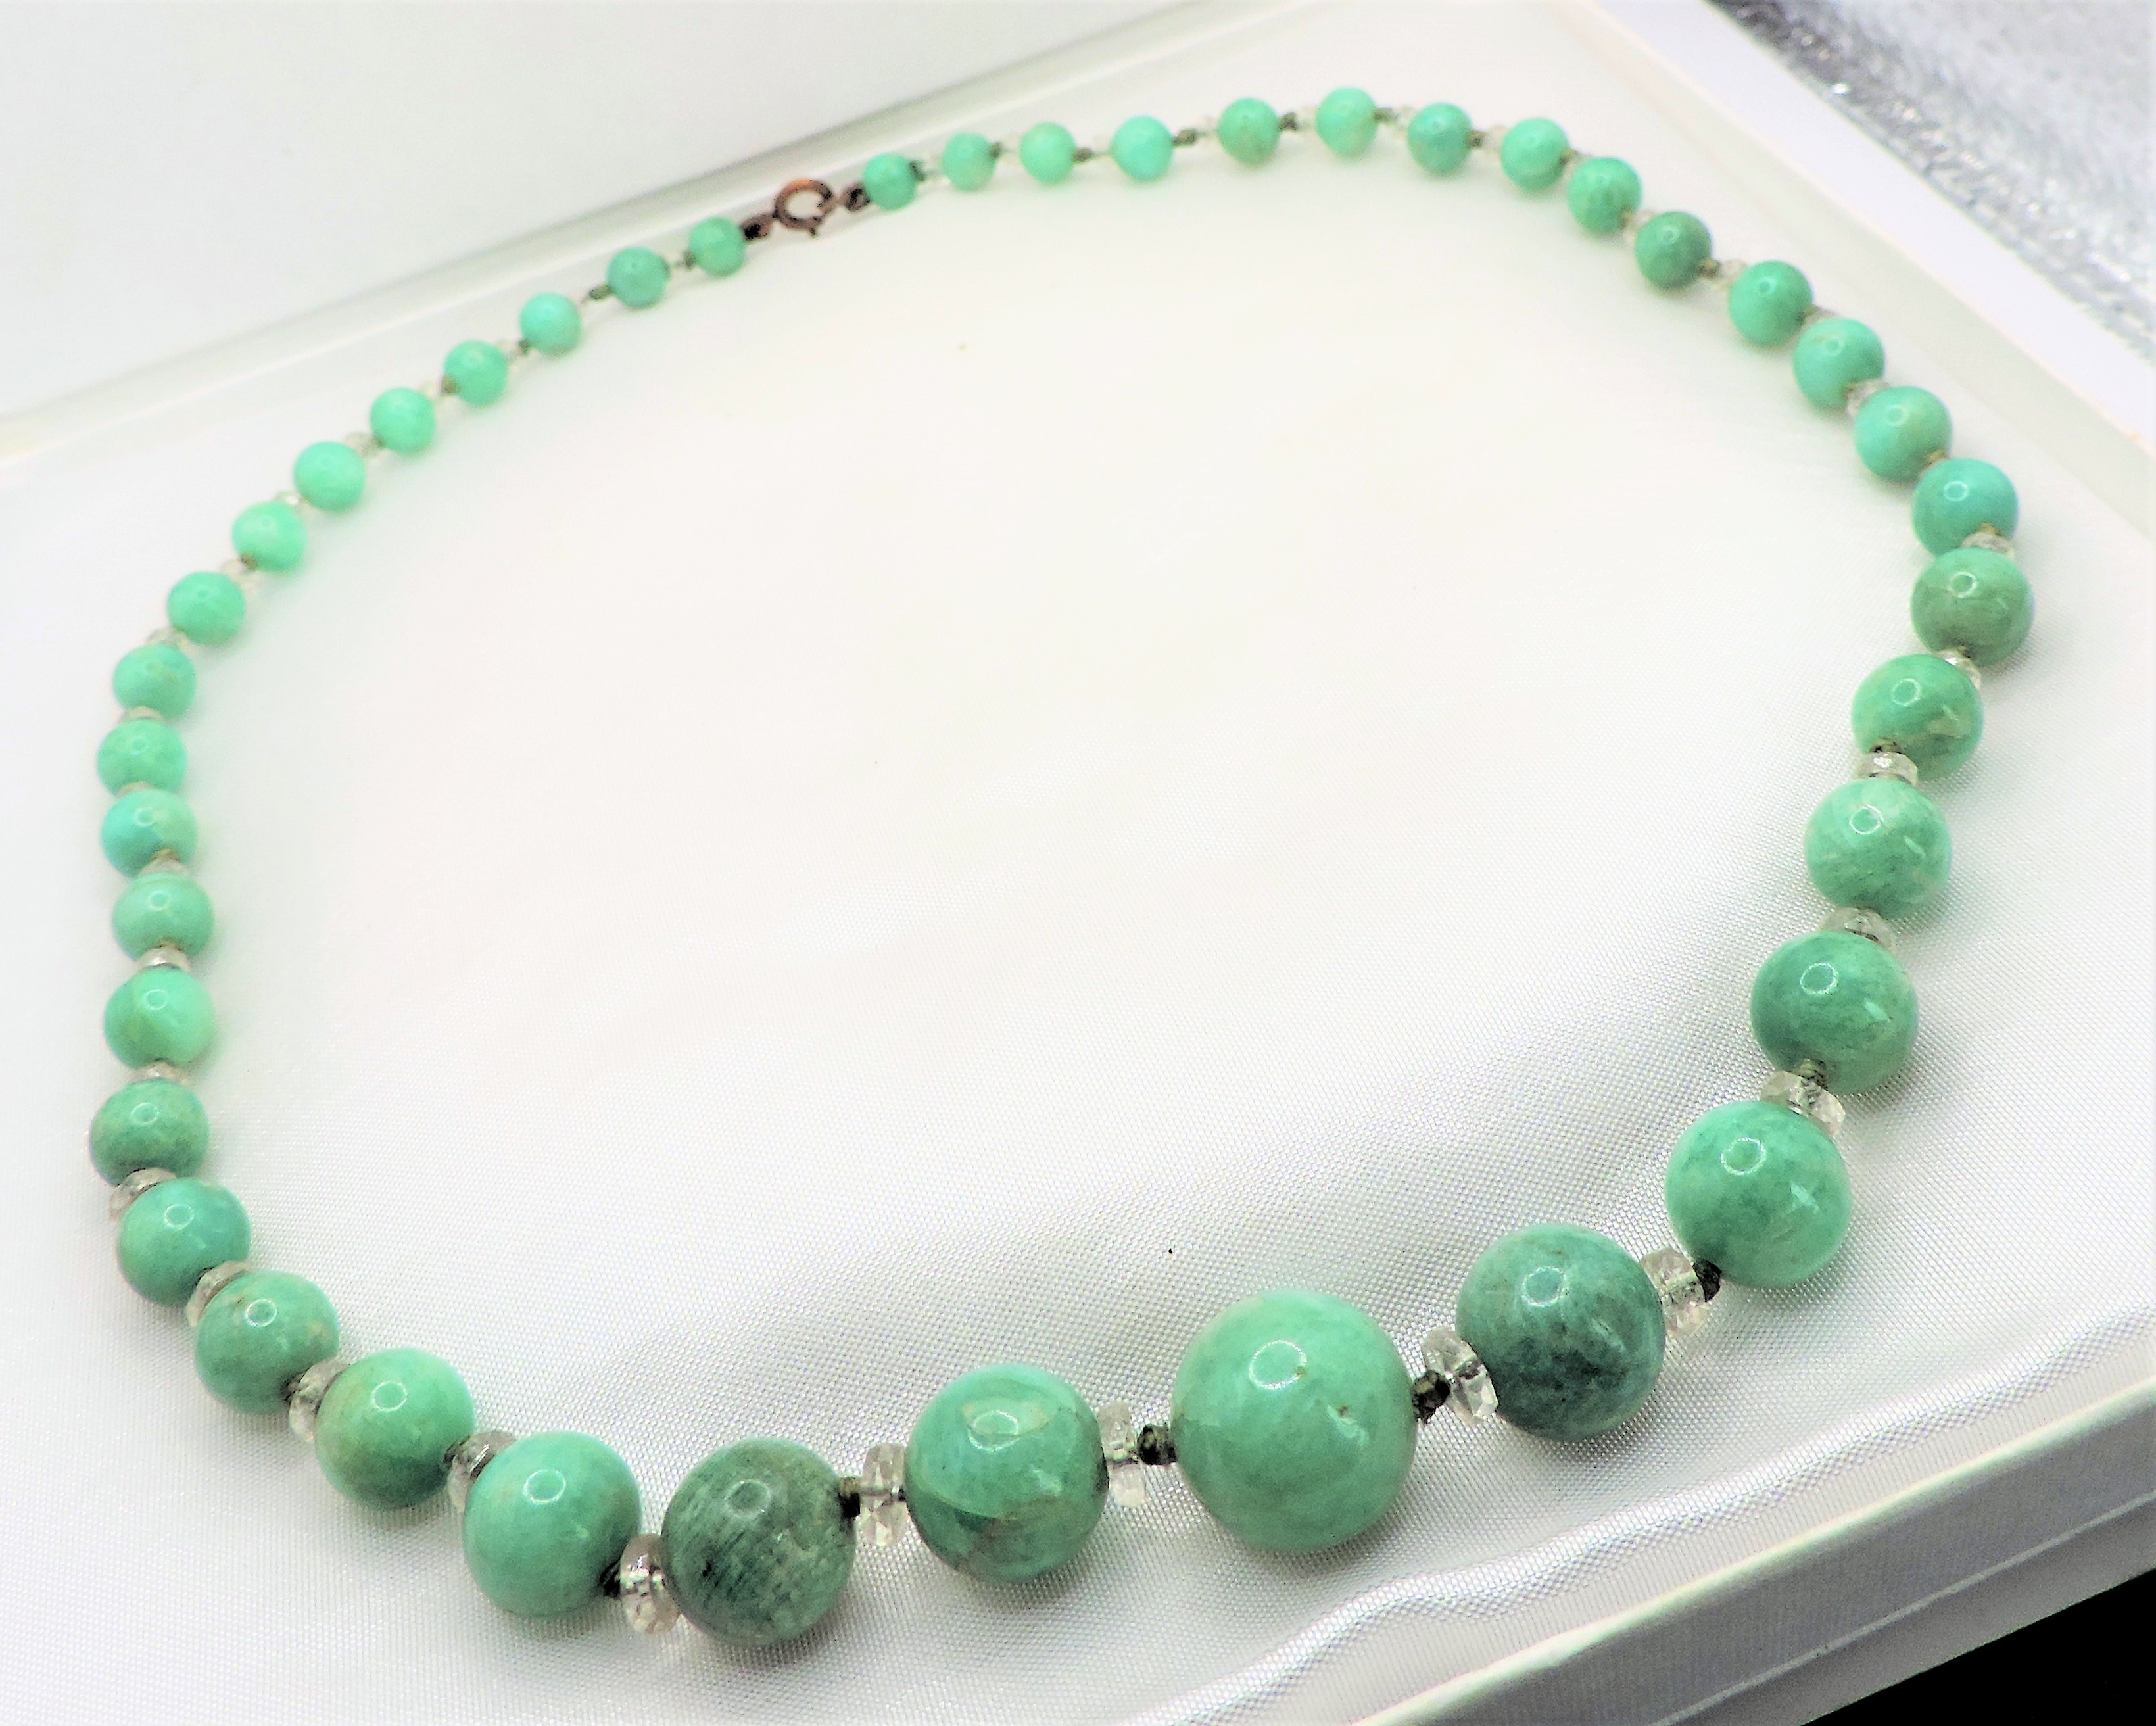 Antique Graduated Amazonite Beads Gemstone Necklace c.1920's Art Deco - Image 3 of 6